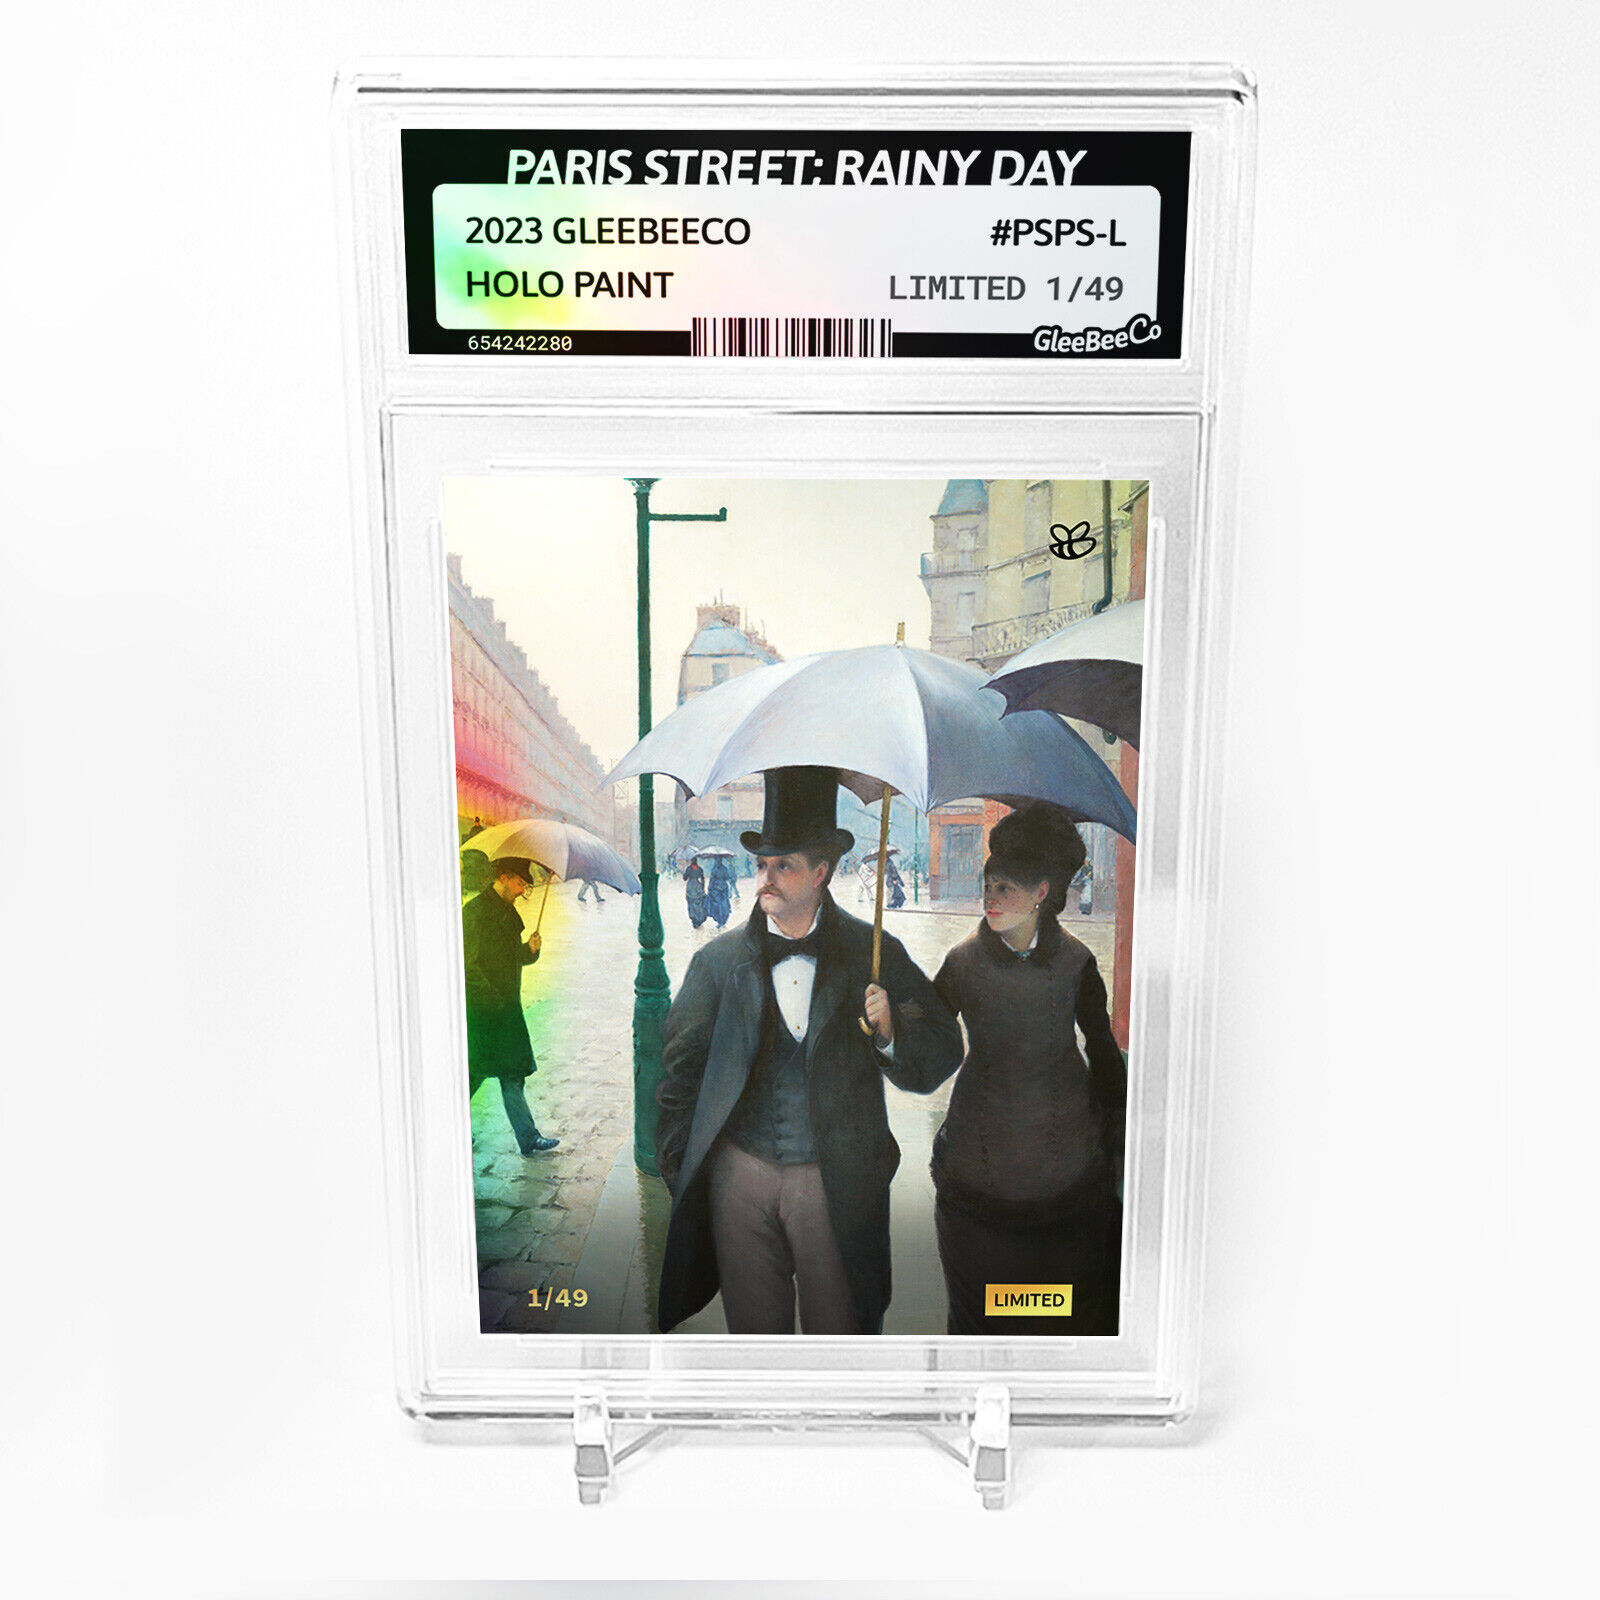 PARIS STREET; RAINY DAY Card 2023 GleeBeeCo Holo Paint Slabbed #PSPS-L Only /49